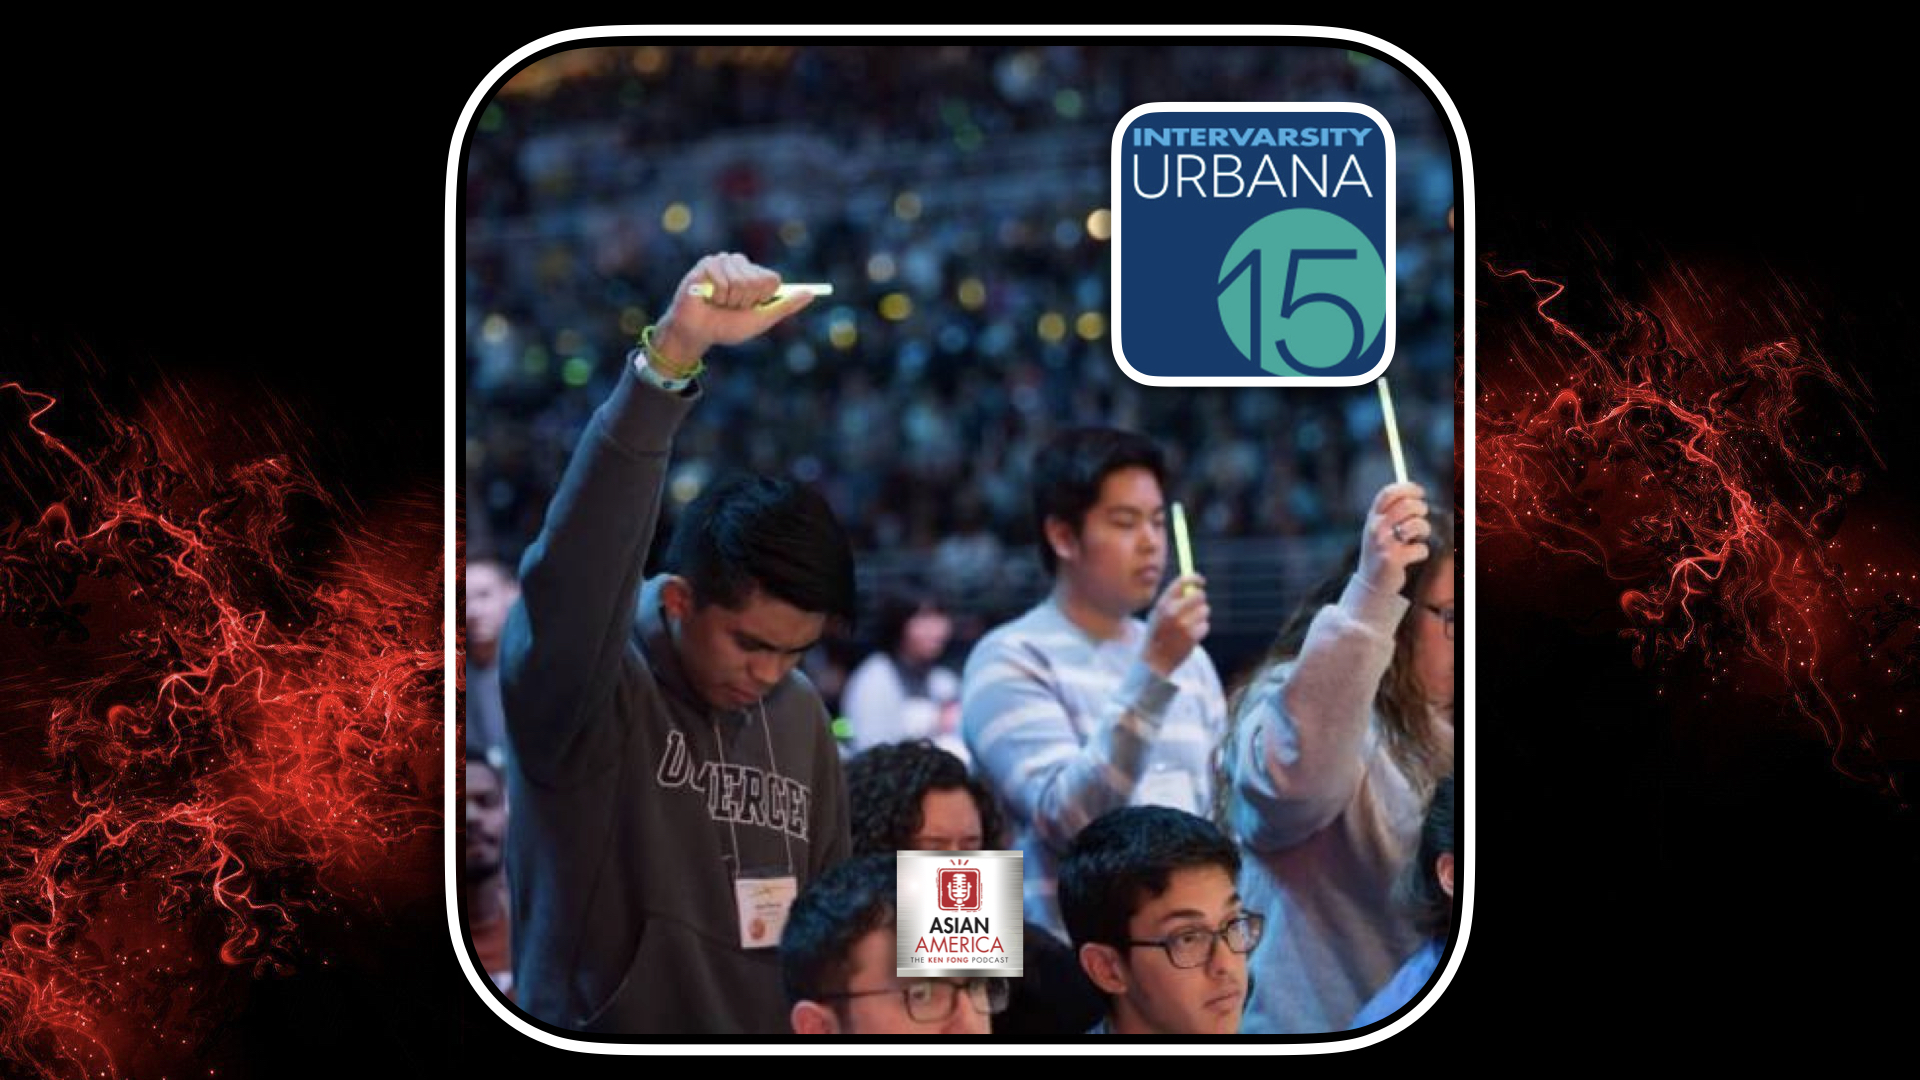 EP 35: Urbana 2015 On Meeting Fans & Listening to LGBTQ Stories